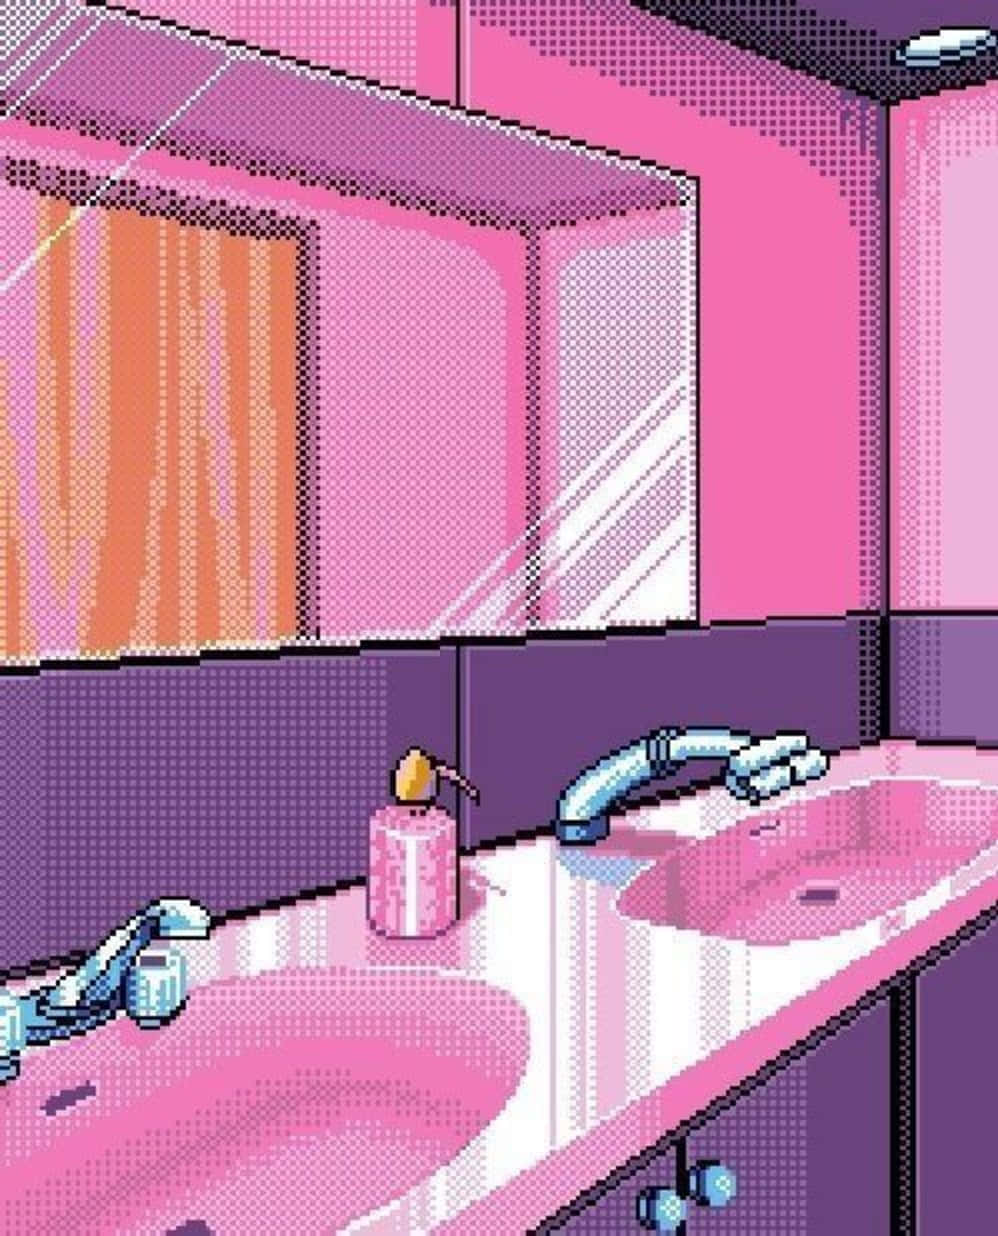 Pink Pixel Art 998 X 1236 Wallpaper